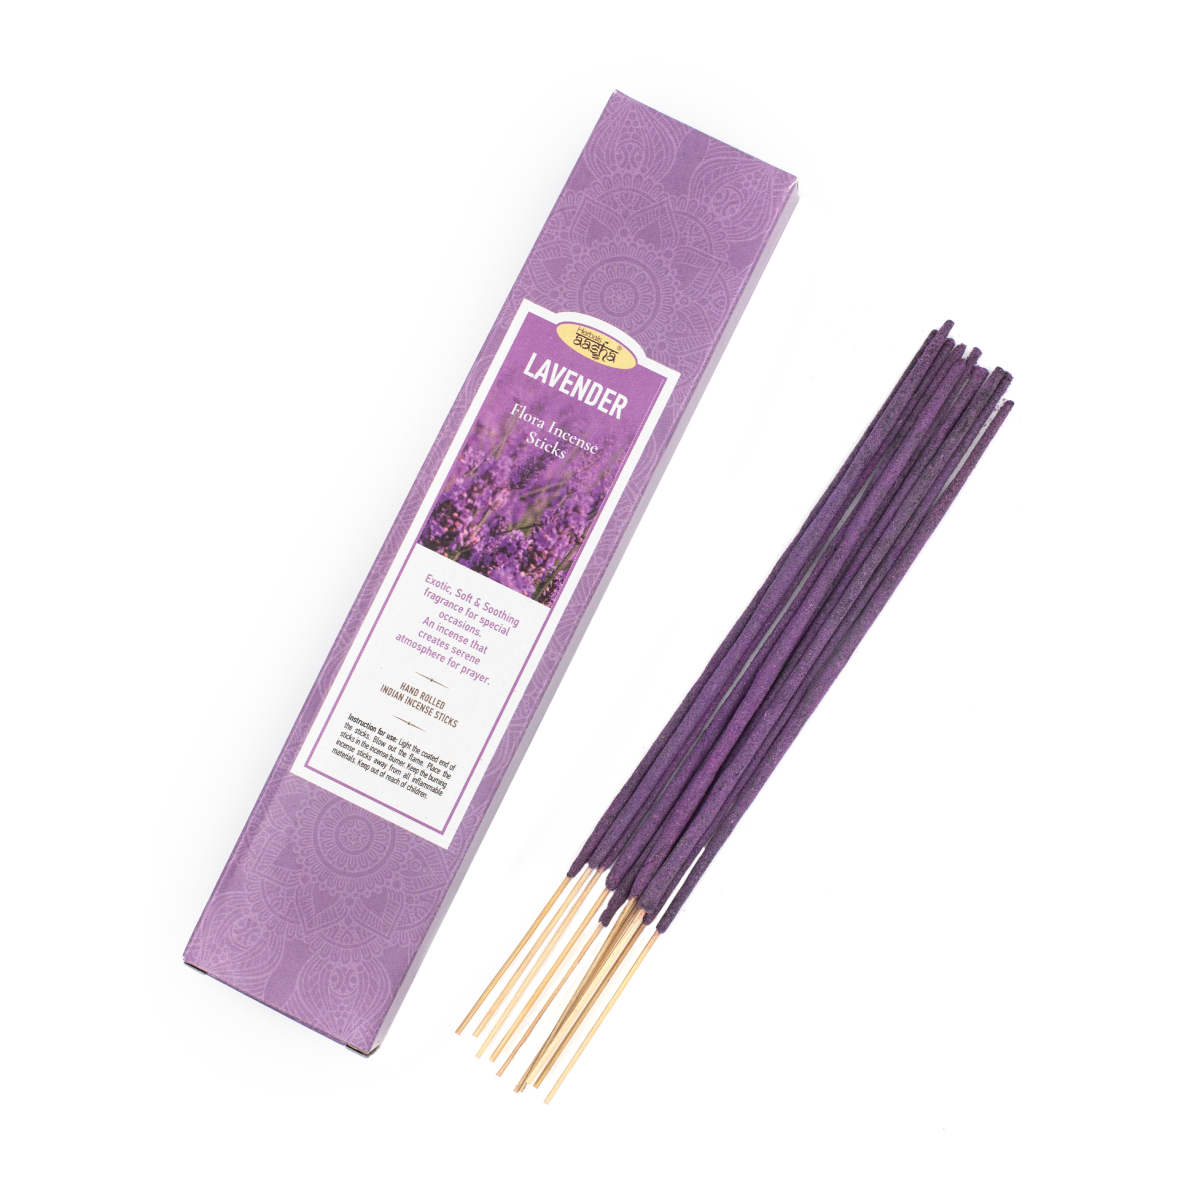 Ароматические палочки Aasha Herbals Лаванда (Lavender), 10 шт ароматические палочки aasha herbals тулси tulsi 10 шт